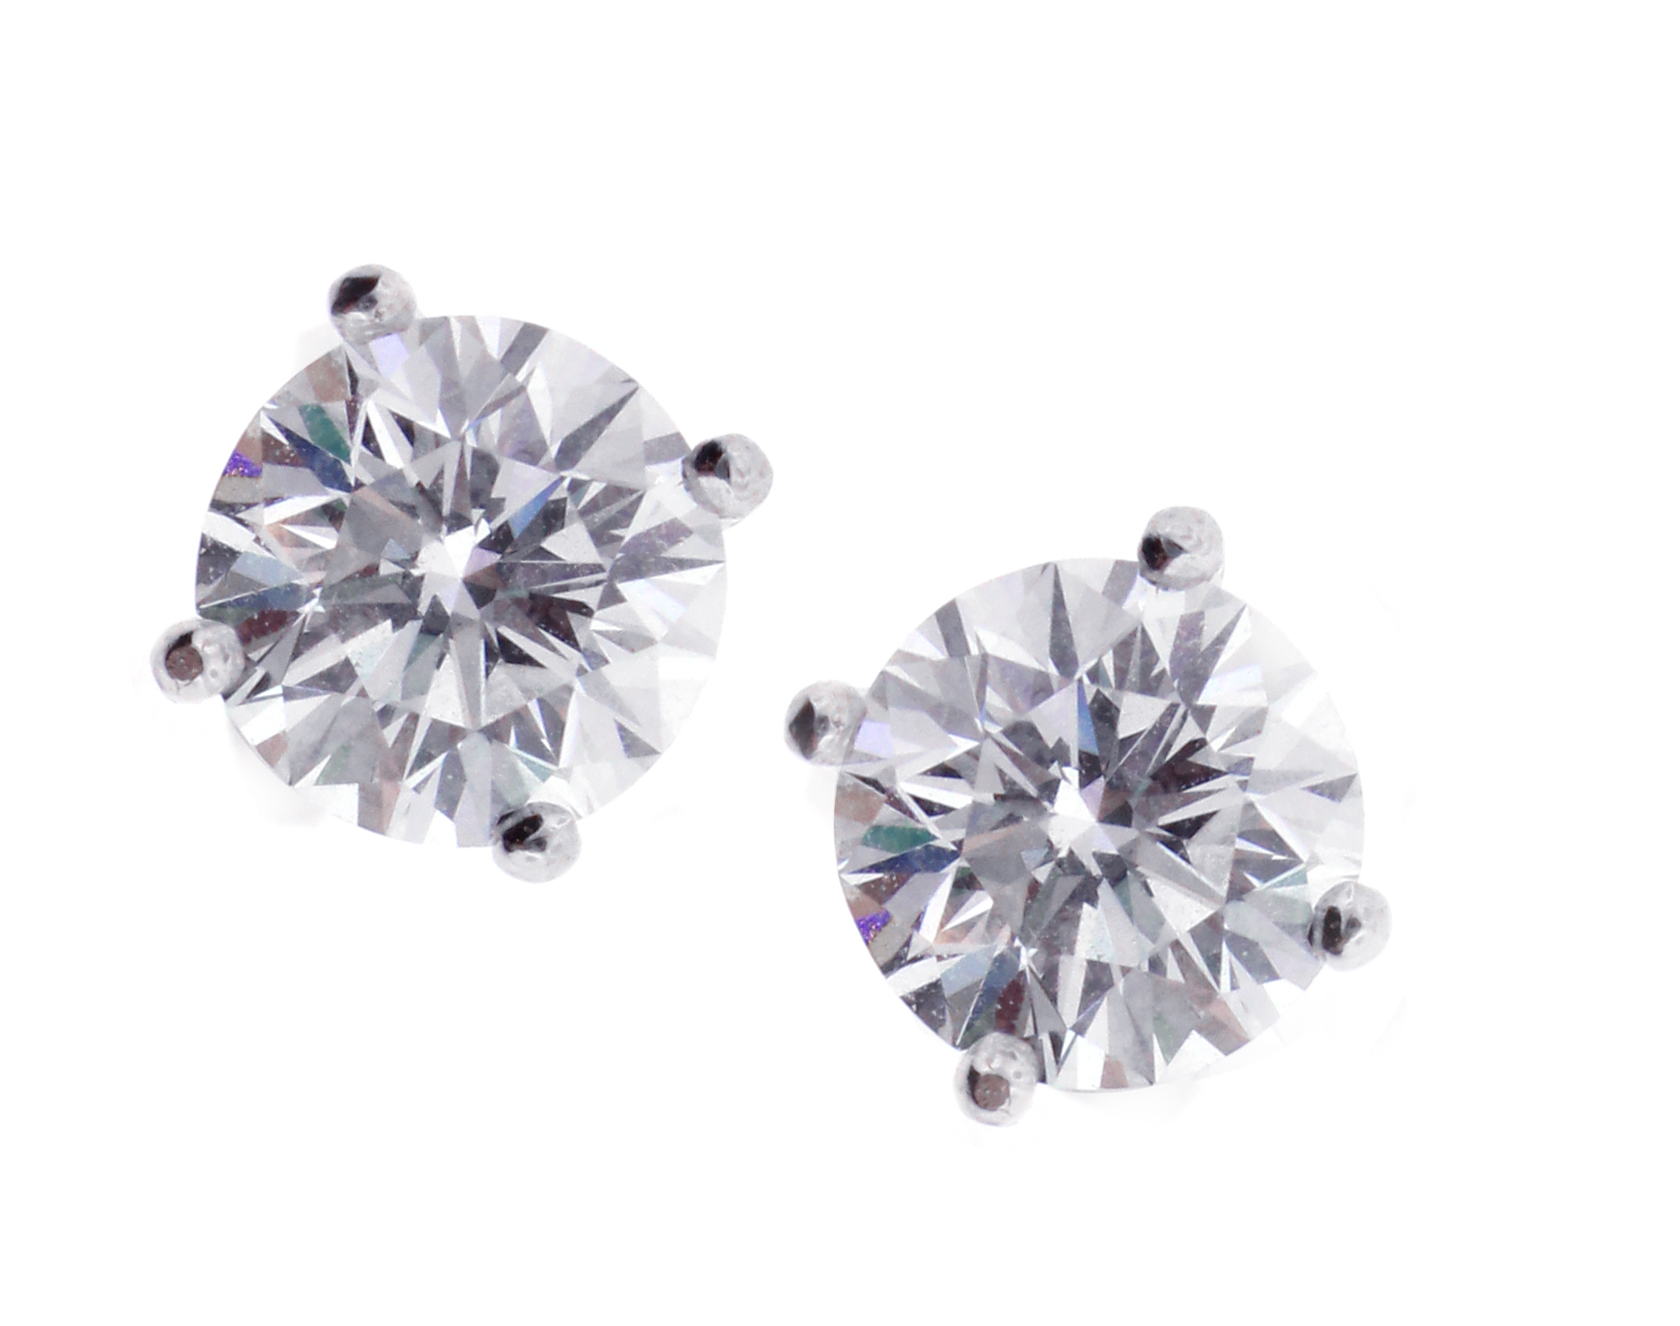 Tiffany & Co 3.29 Carat Diamond Stud Earrings